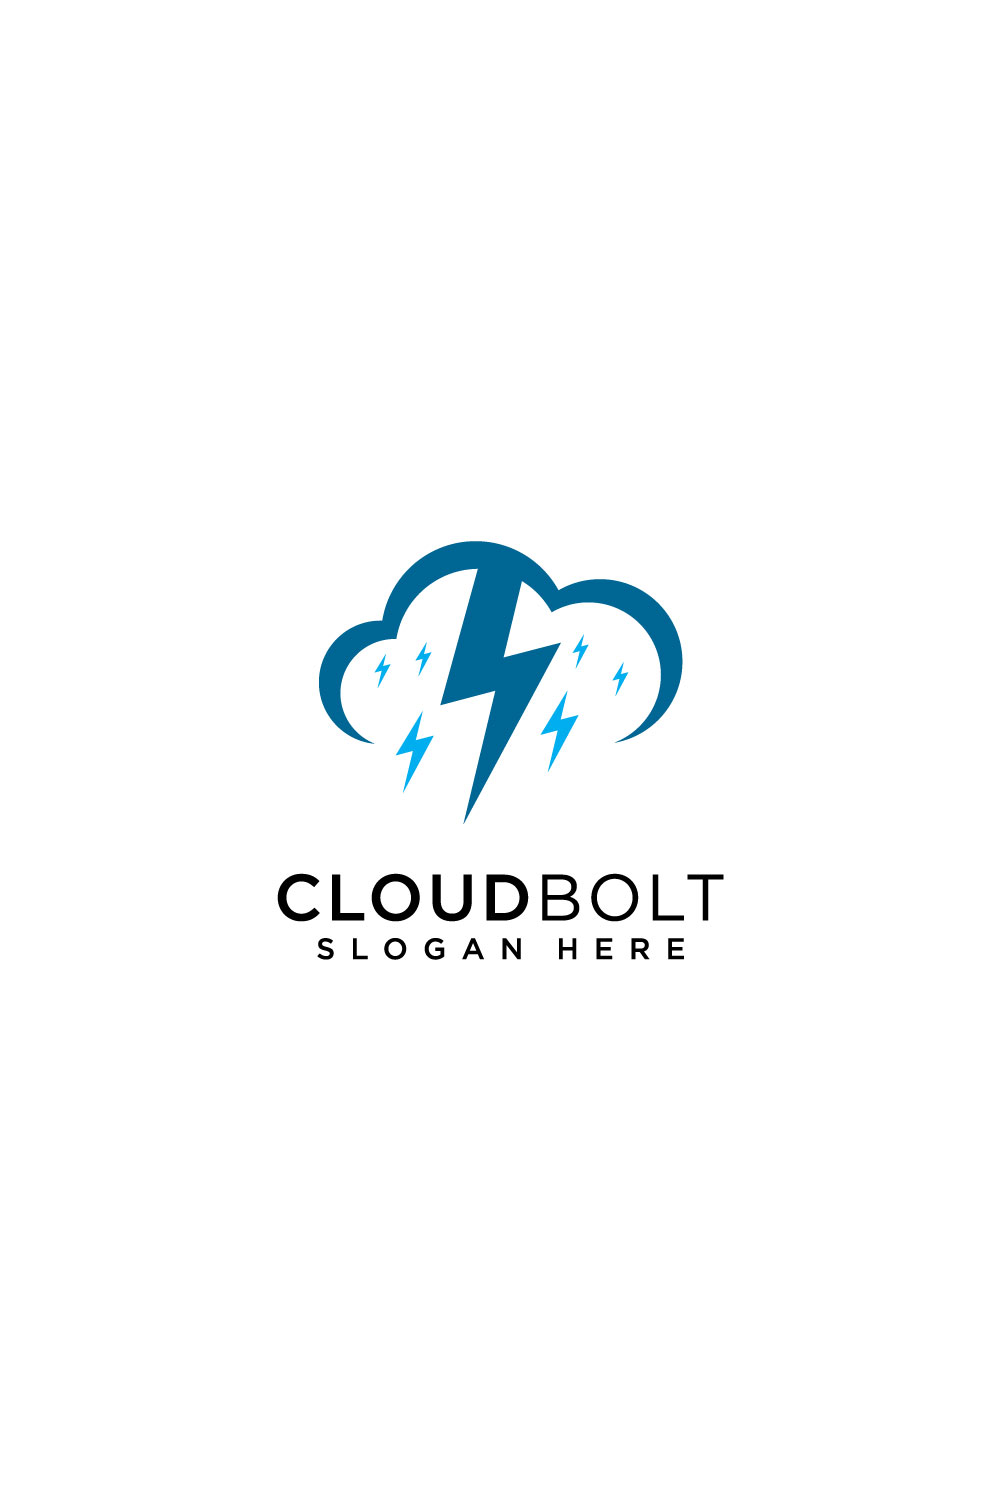 cloud bolt logo vector design pinterest preview image.